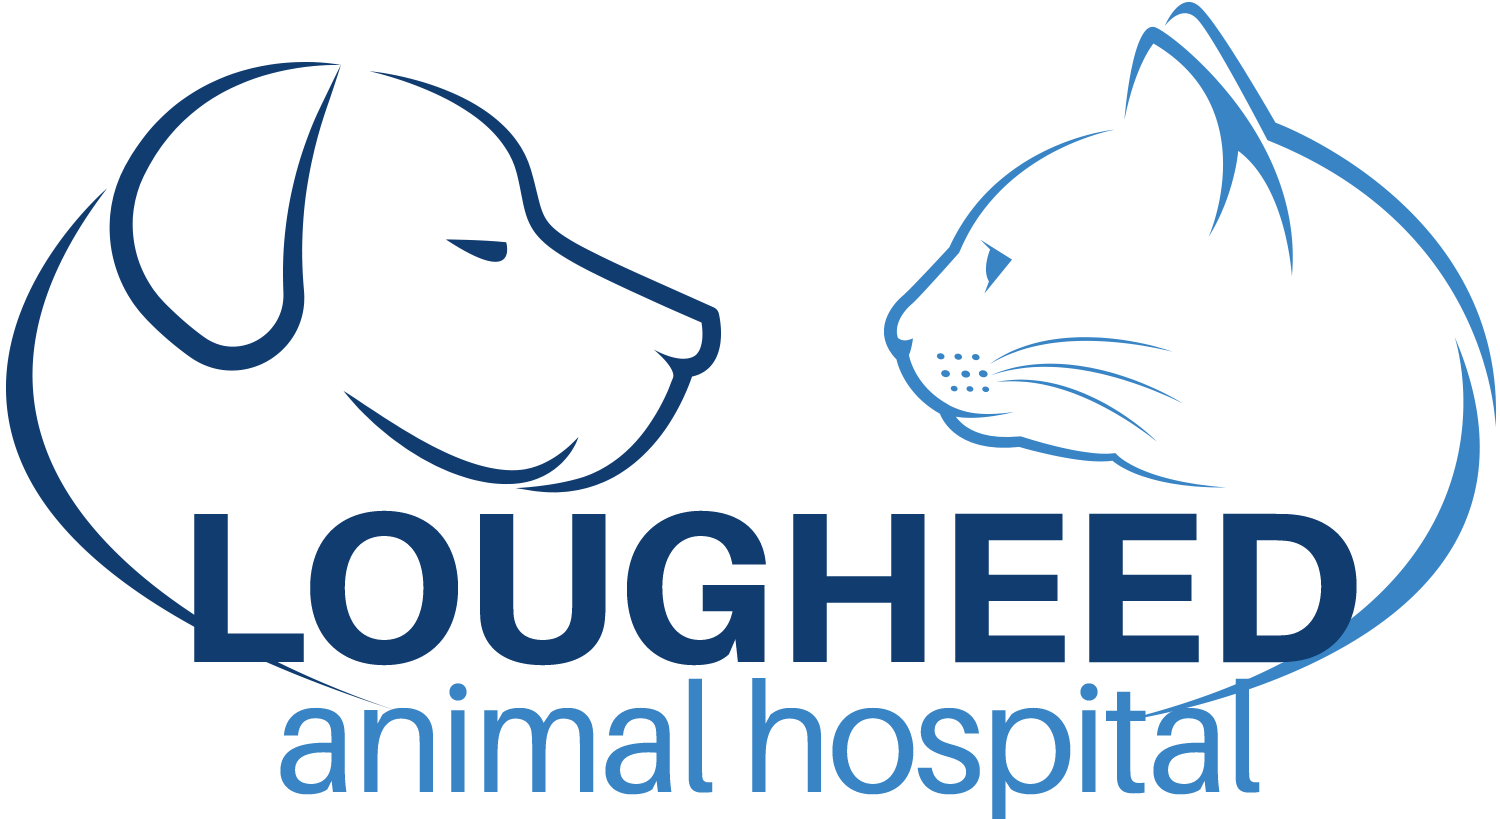 Lougheed Animal Hospital